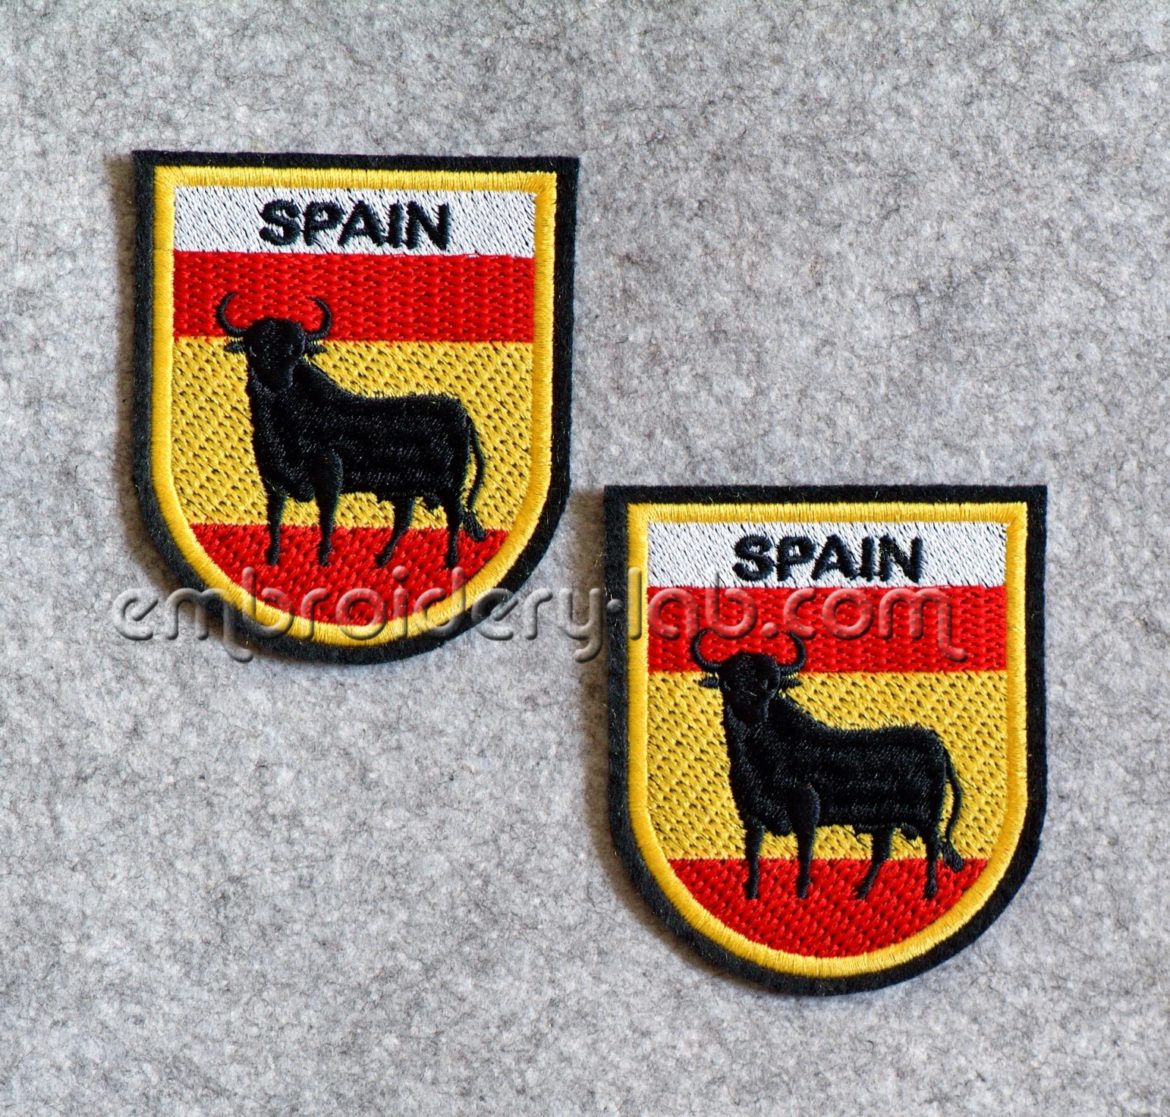 SPAIN Patch 0001